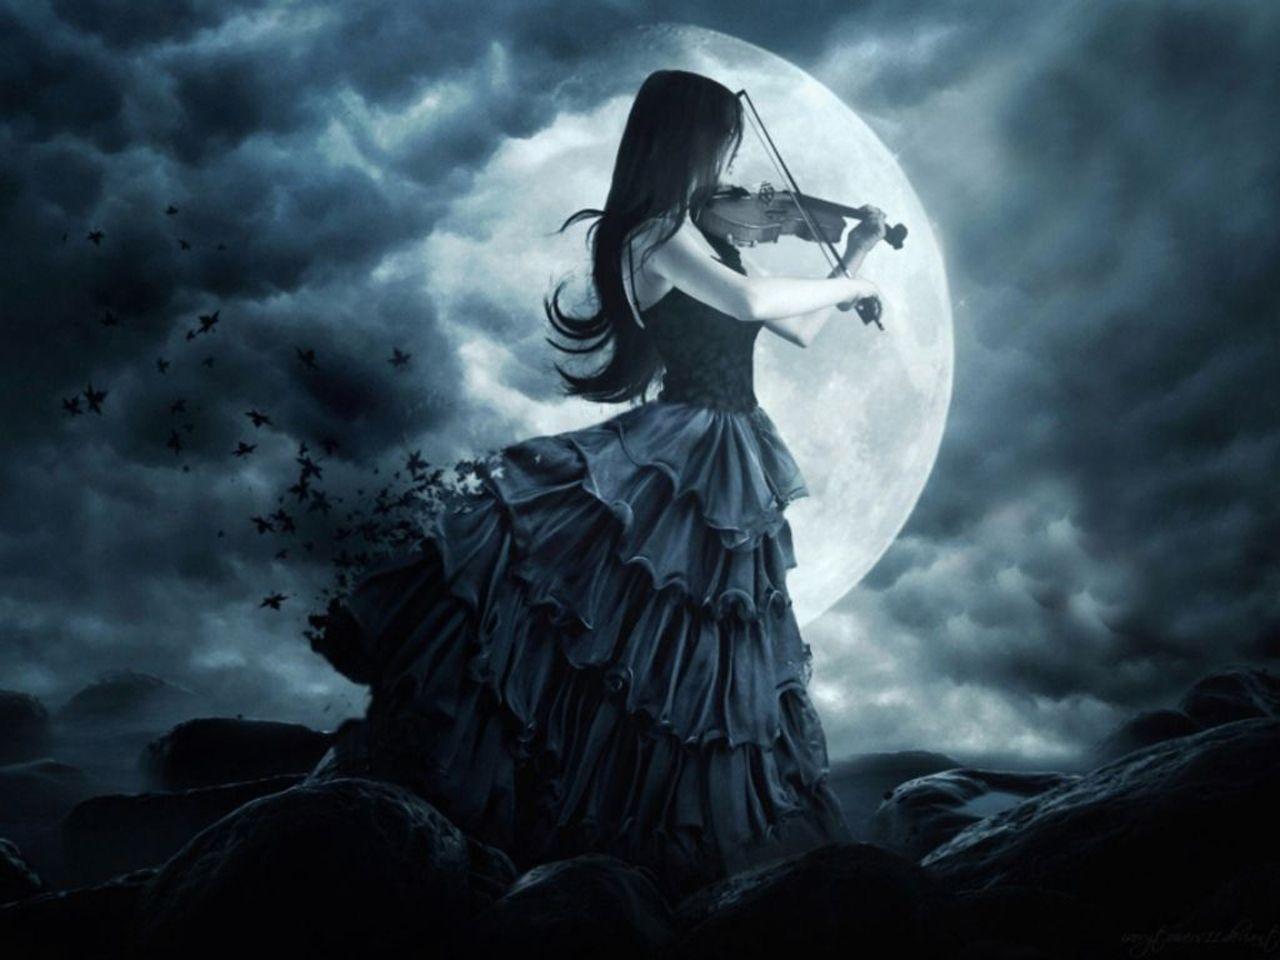 Beautiful Romantic Moonlight Wallpaper. Gothic wallpaper, Gothic music, Girl playing violin